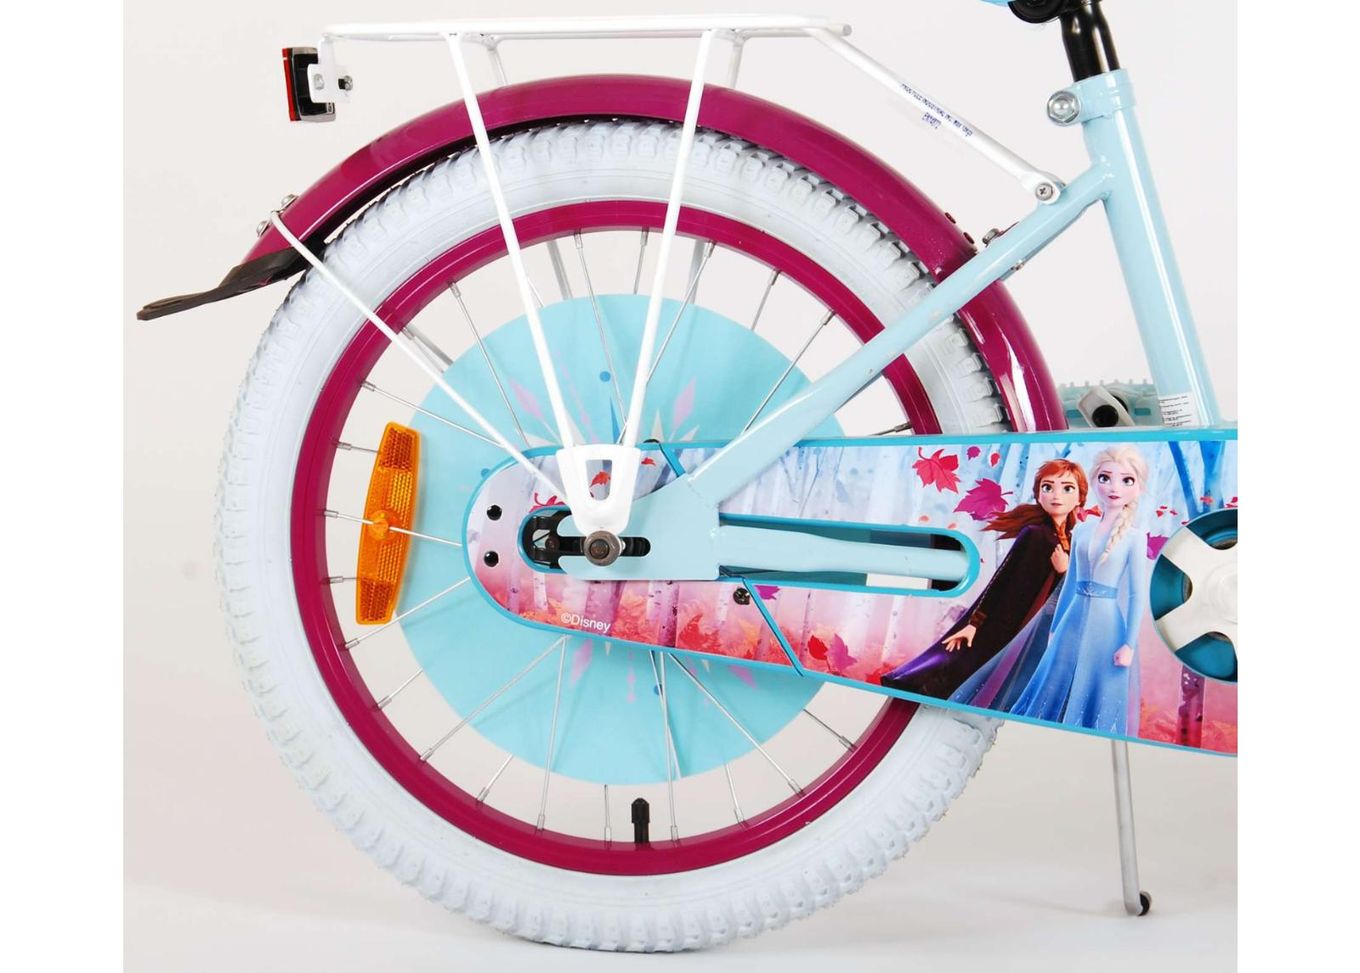 Laste jalgratas Disney Frozen 18 tolli Volare suurendatud